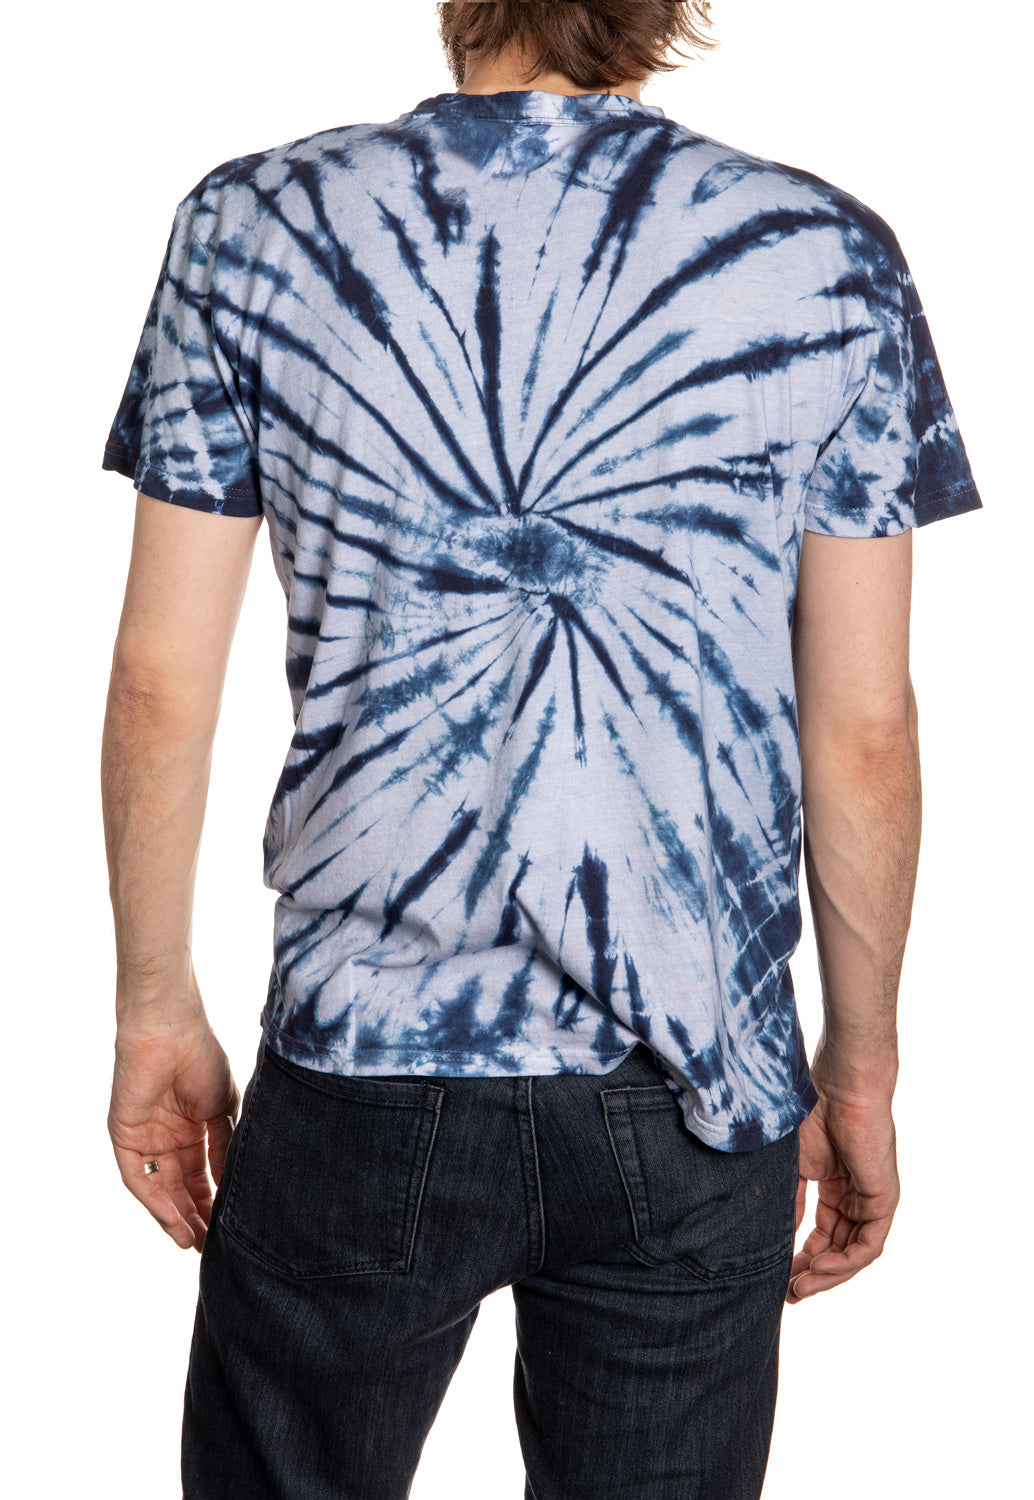 Washington Capitals Spiral Tie Dye T-Shirt for Men